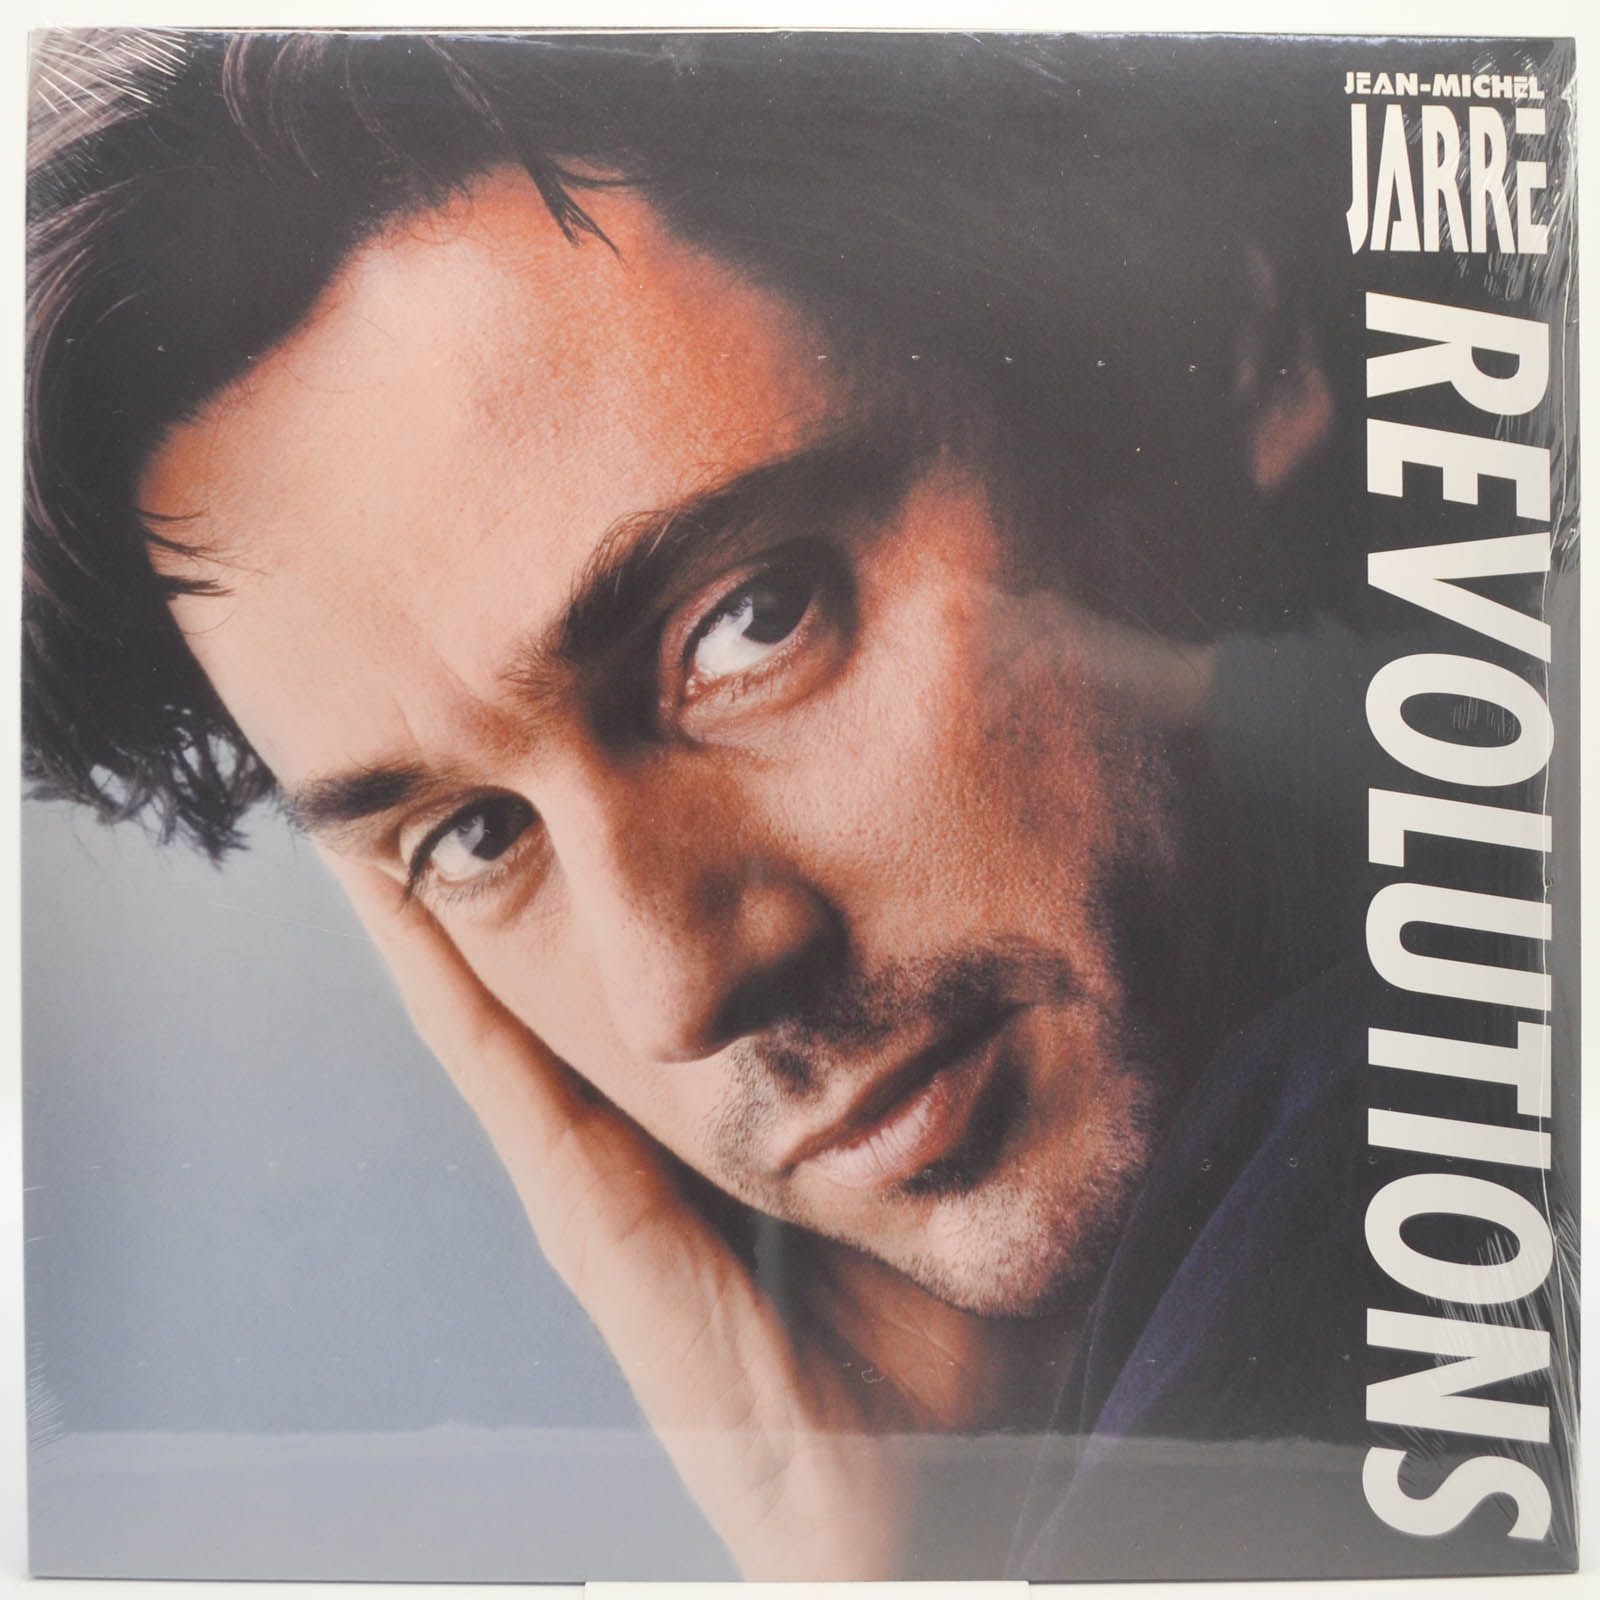 Jean-Michel Jarre — Revolutions, 1988